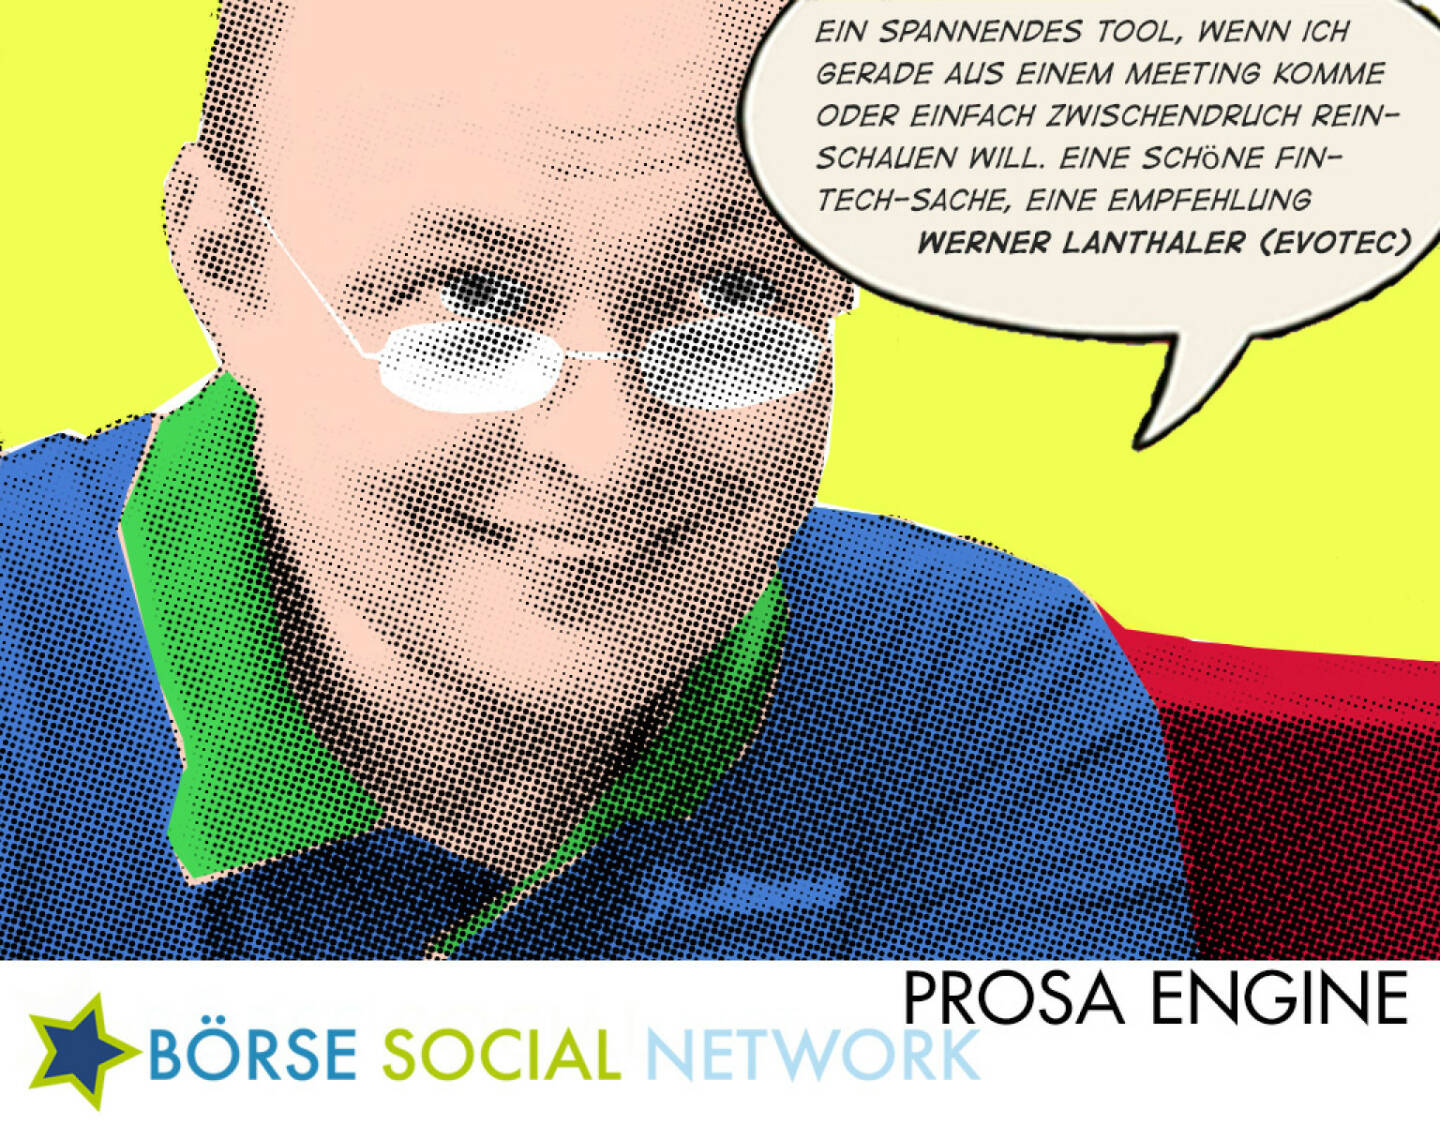 Werner Lanthaler, Evotec, über die BSN Prosa Engine